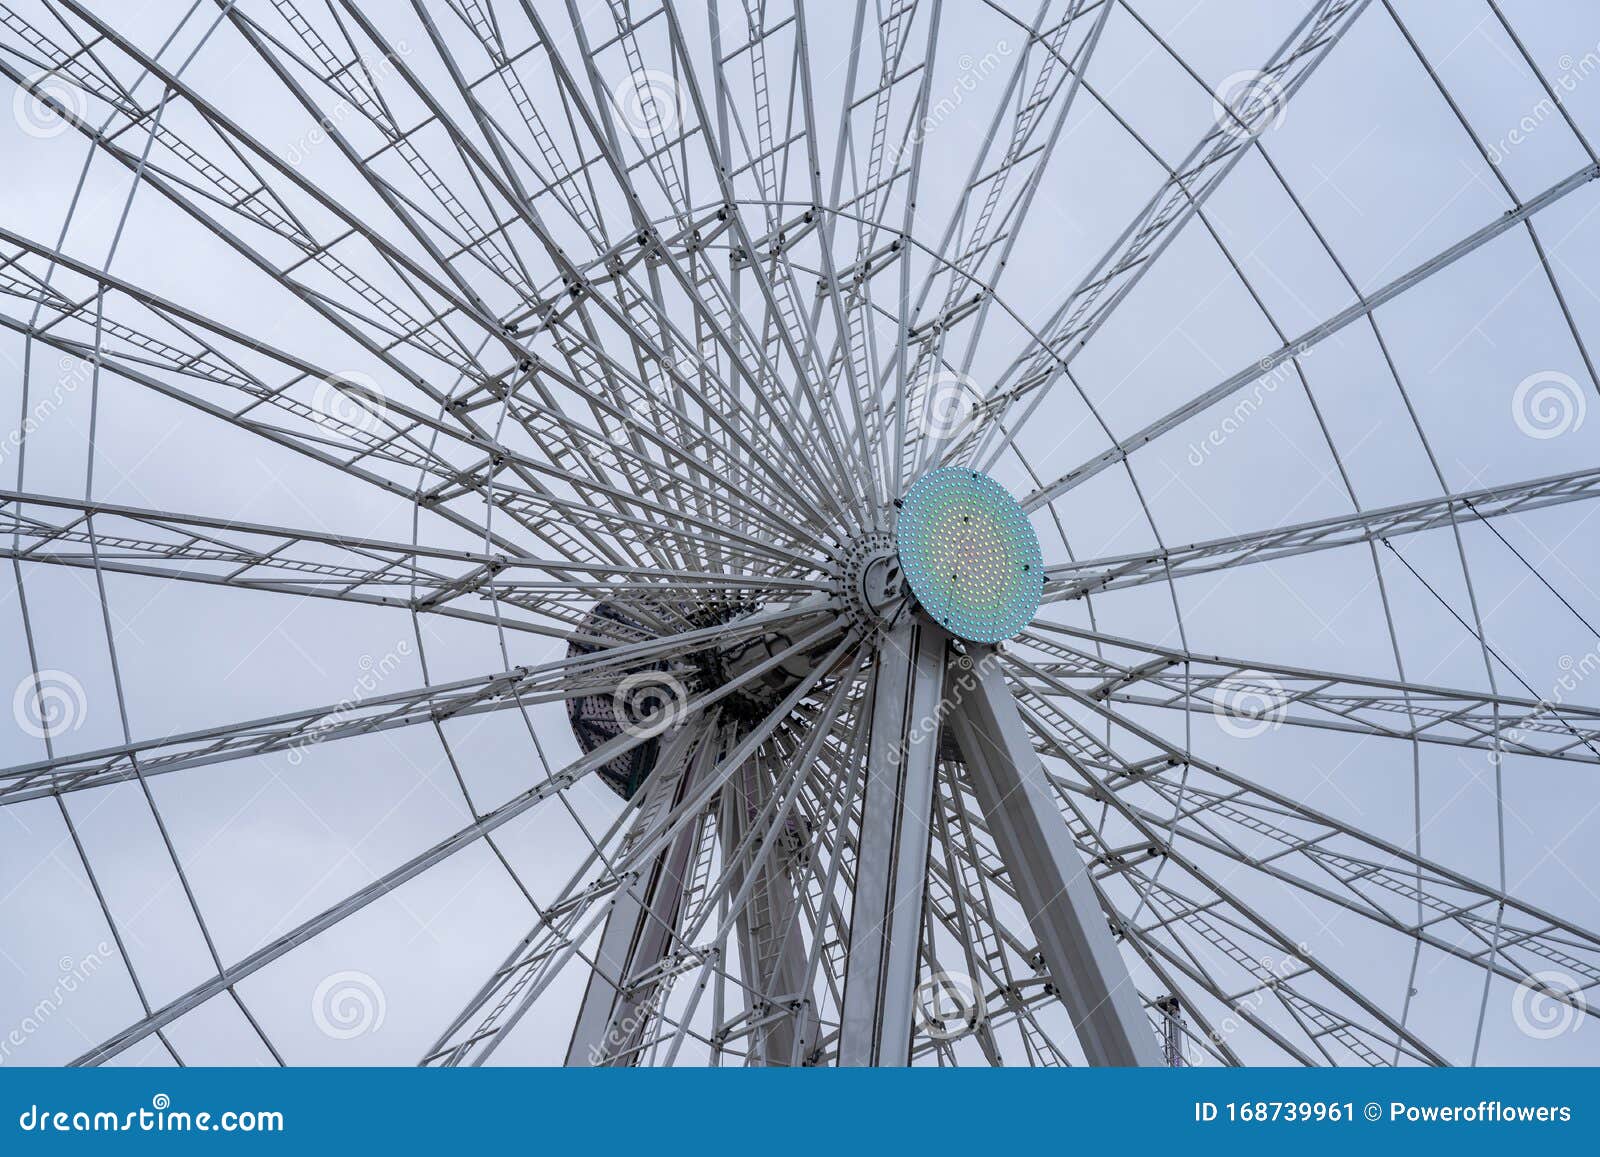 the tallest transportable wheel in the world.hyde park winter wonderland